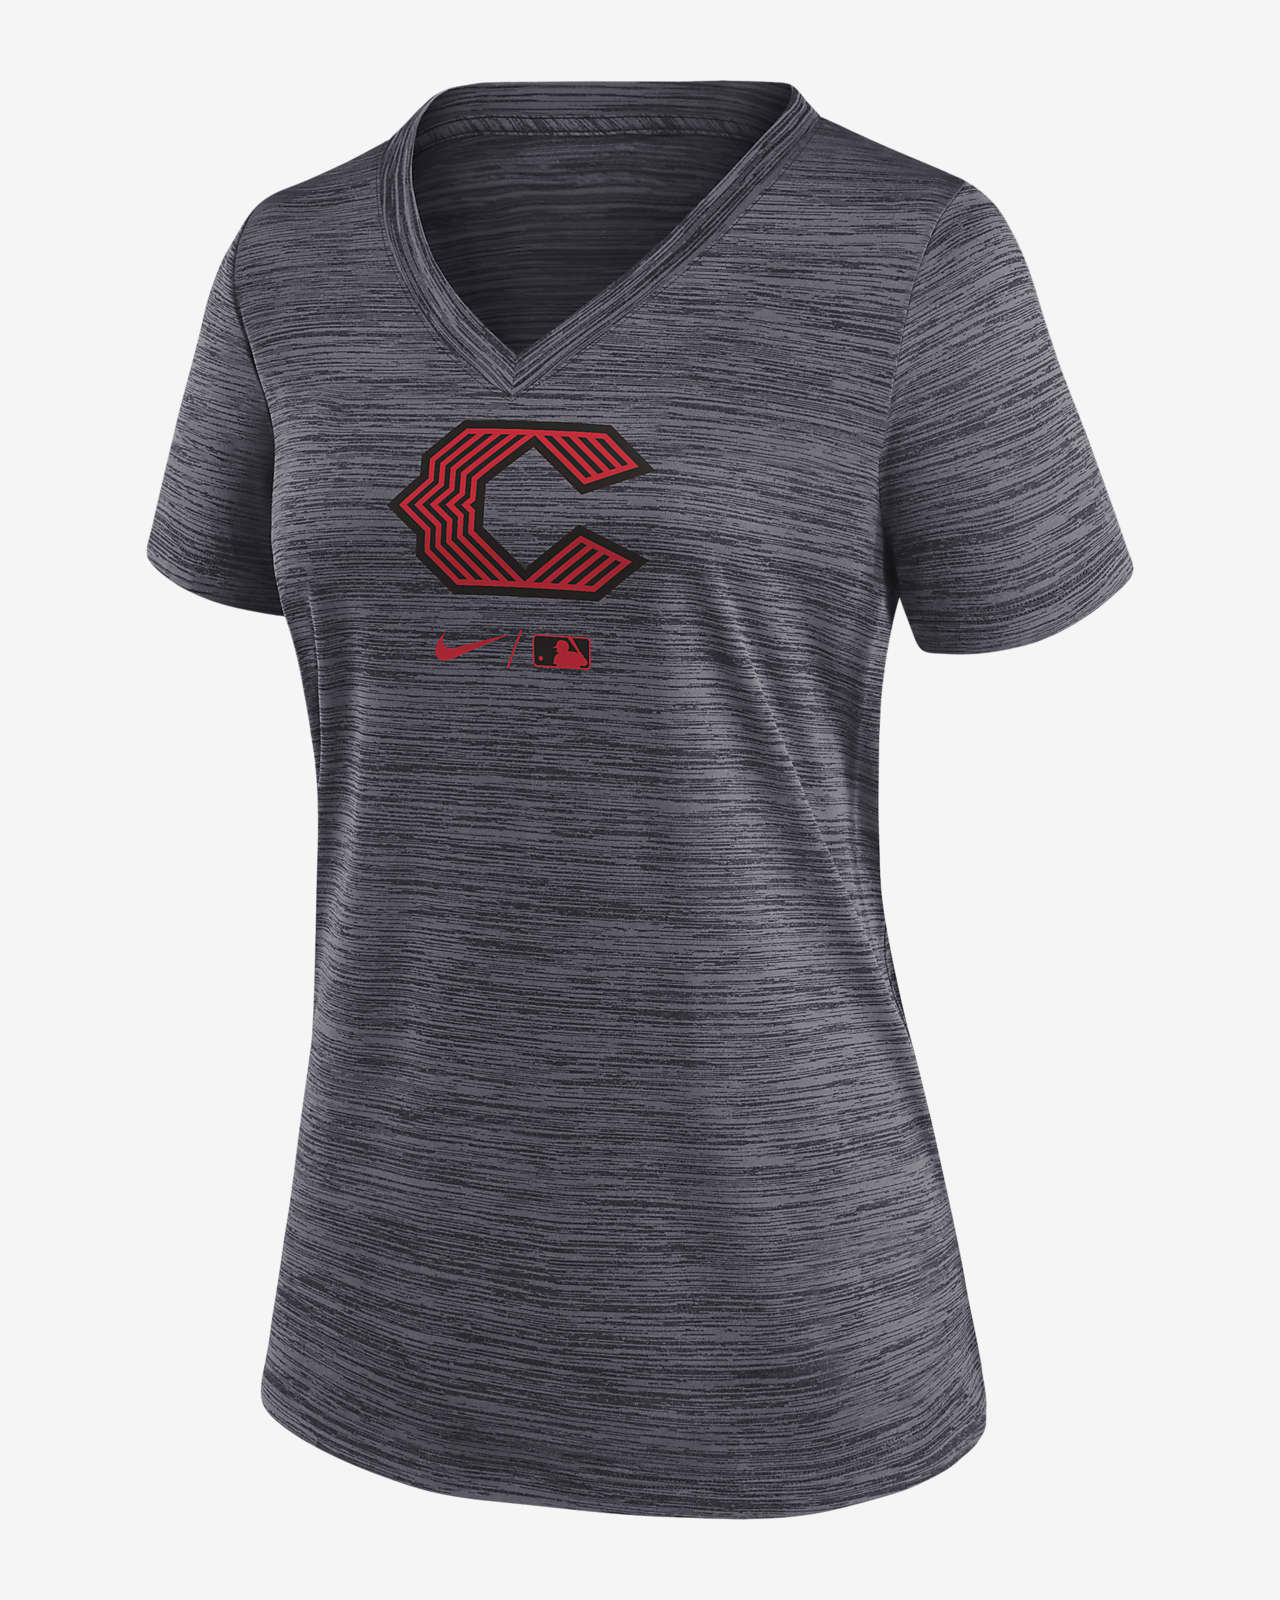 Nike Dri-FIT City Connect Velocity Practice (MLB Cincinnati Reds) Women's  V-Neck T-Shirt.